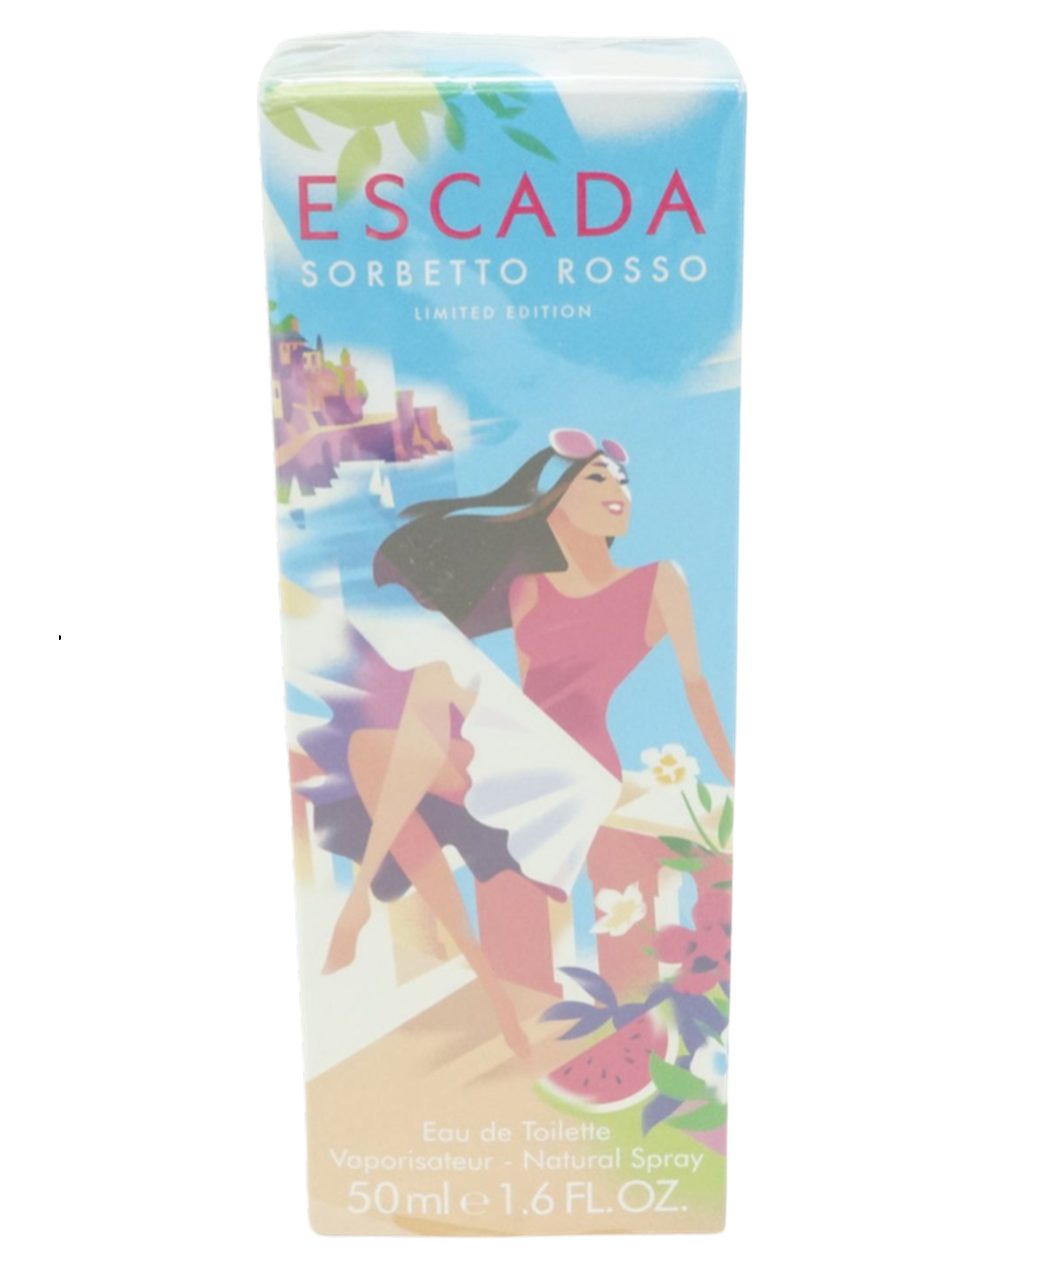 ESCADA Eau de Toilette Escada Sorbetto Rosso Eau de Toilette Spray Limited Edition 50ml